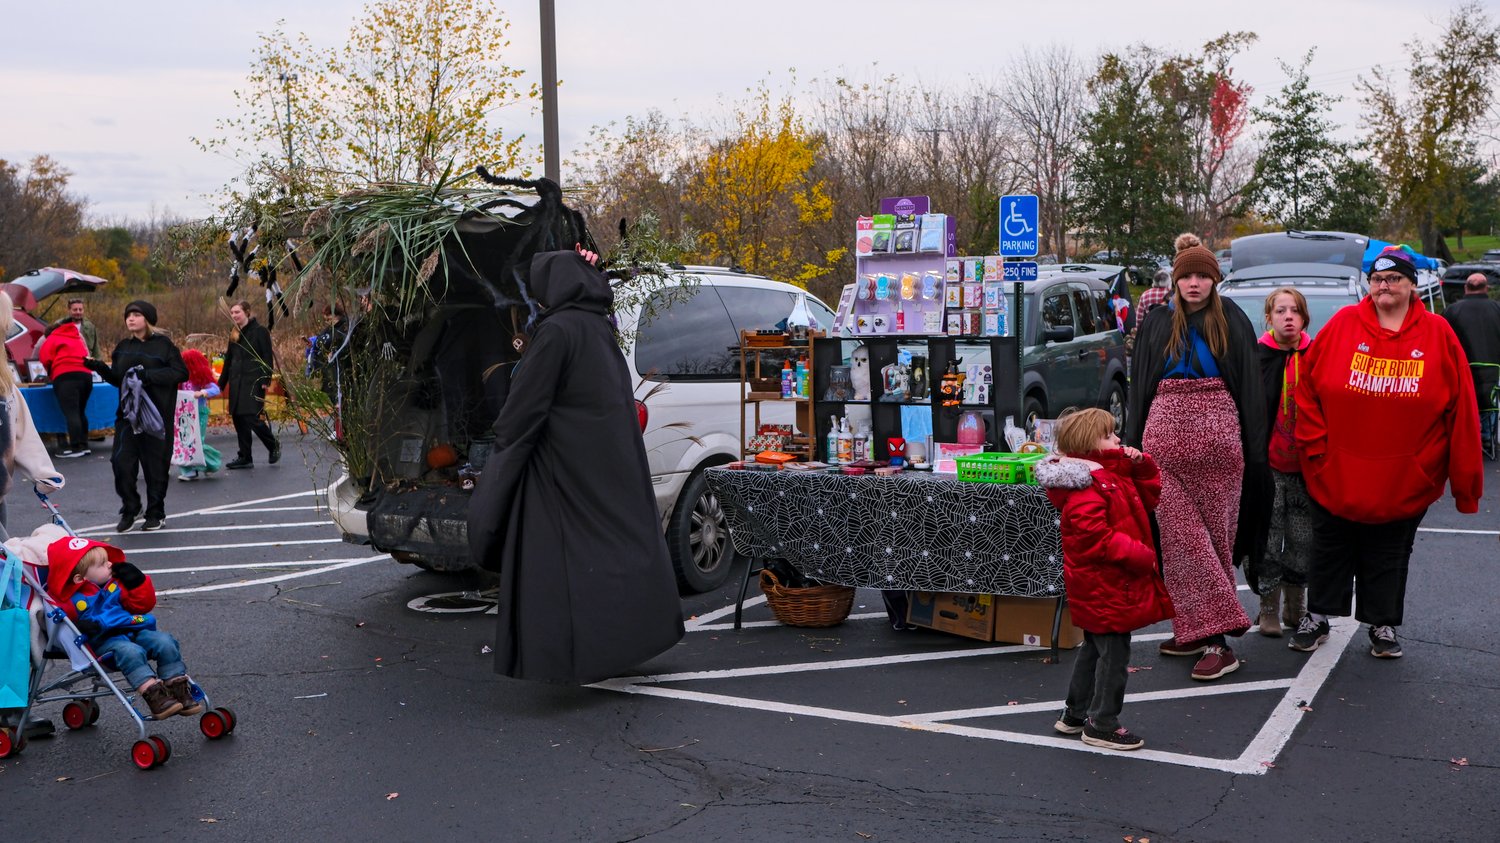 Fall fest also included a vendor market.